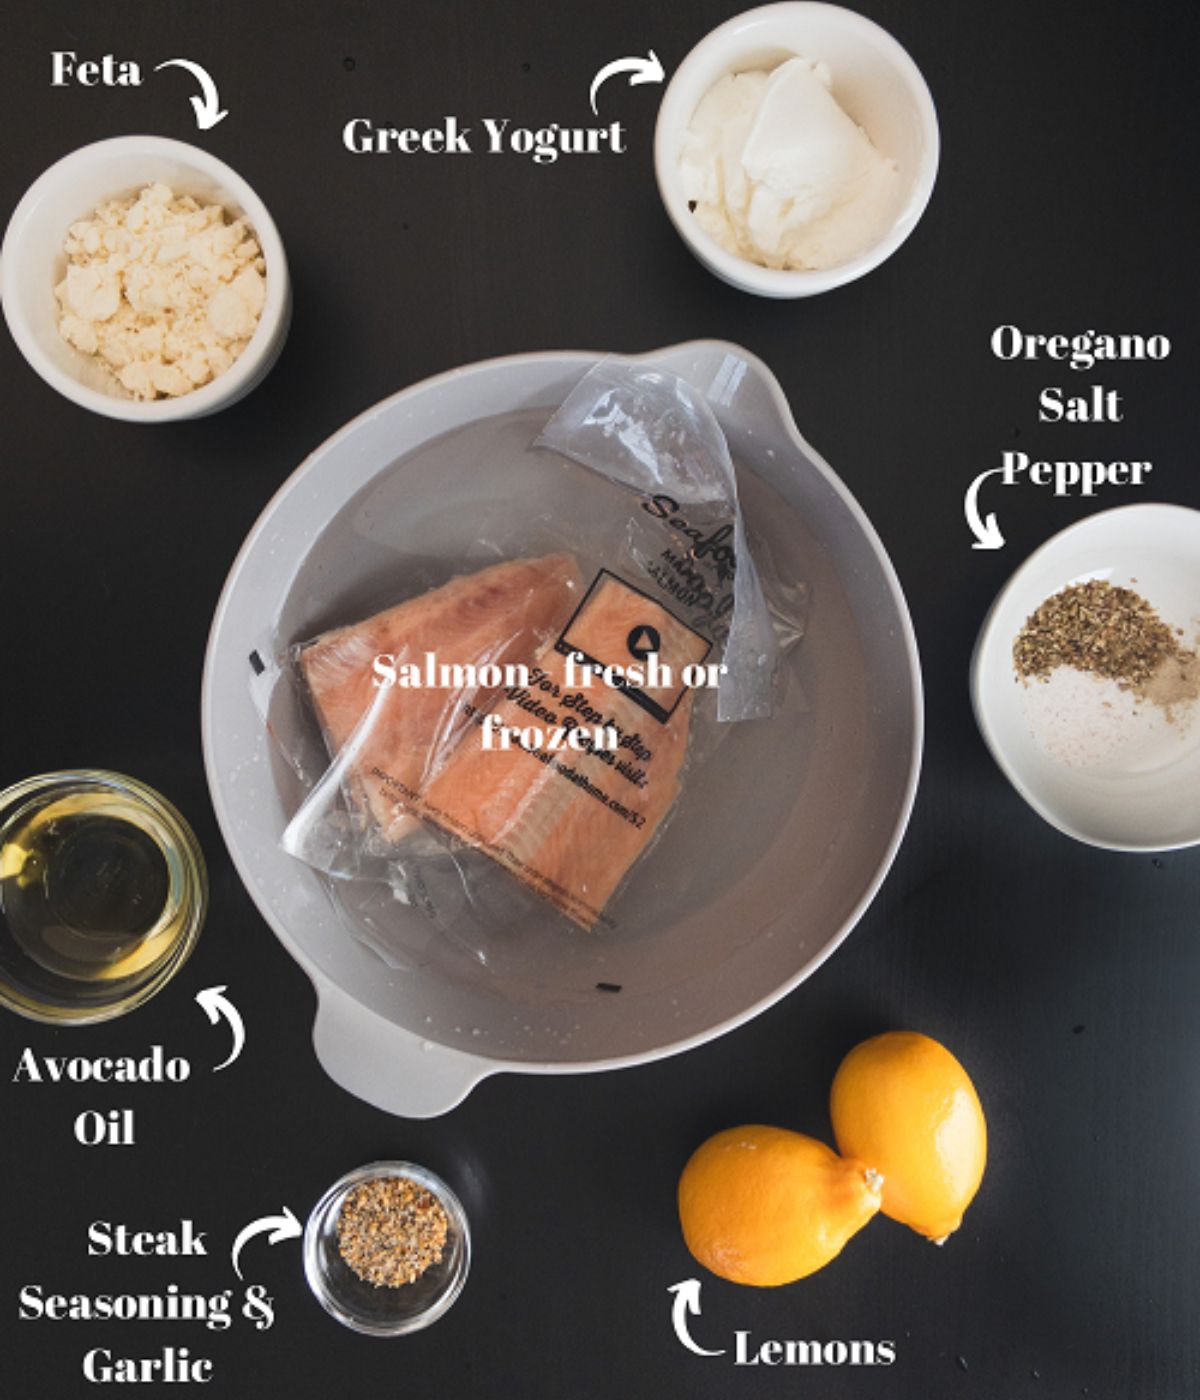 Ingredients including salmon, greek yogurt, feta, lemon, salt, pepper, garlic, and oil.